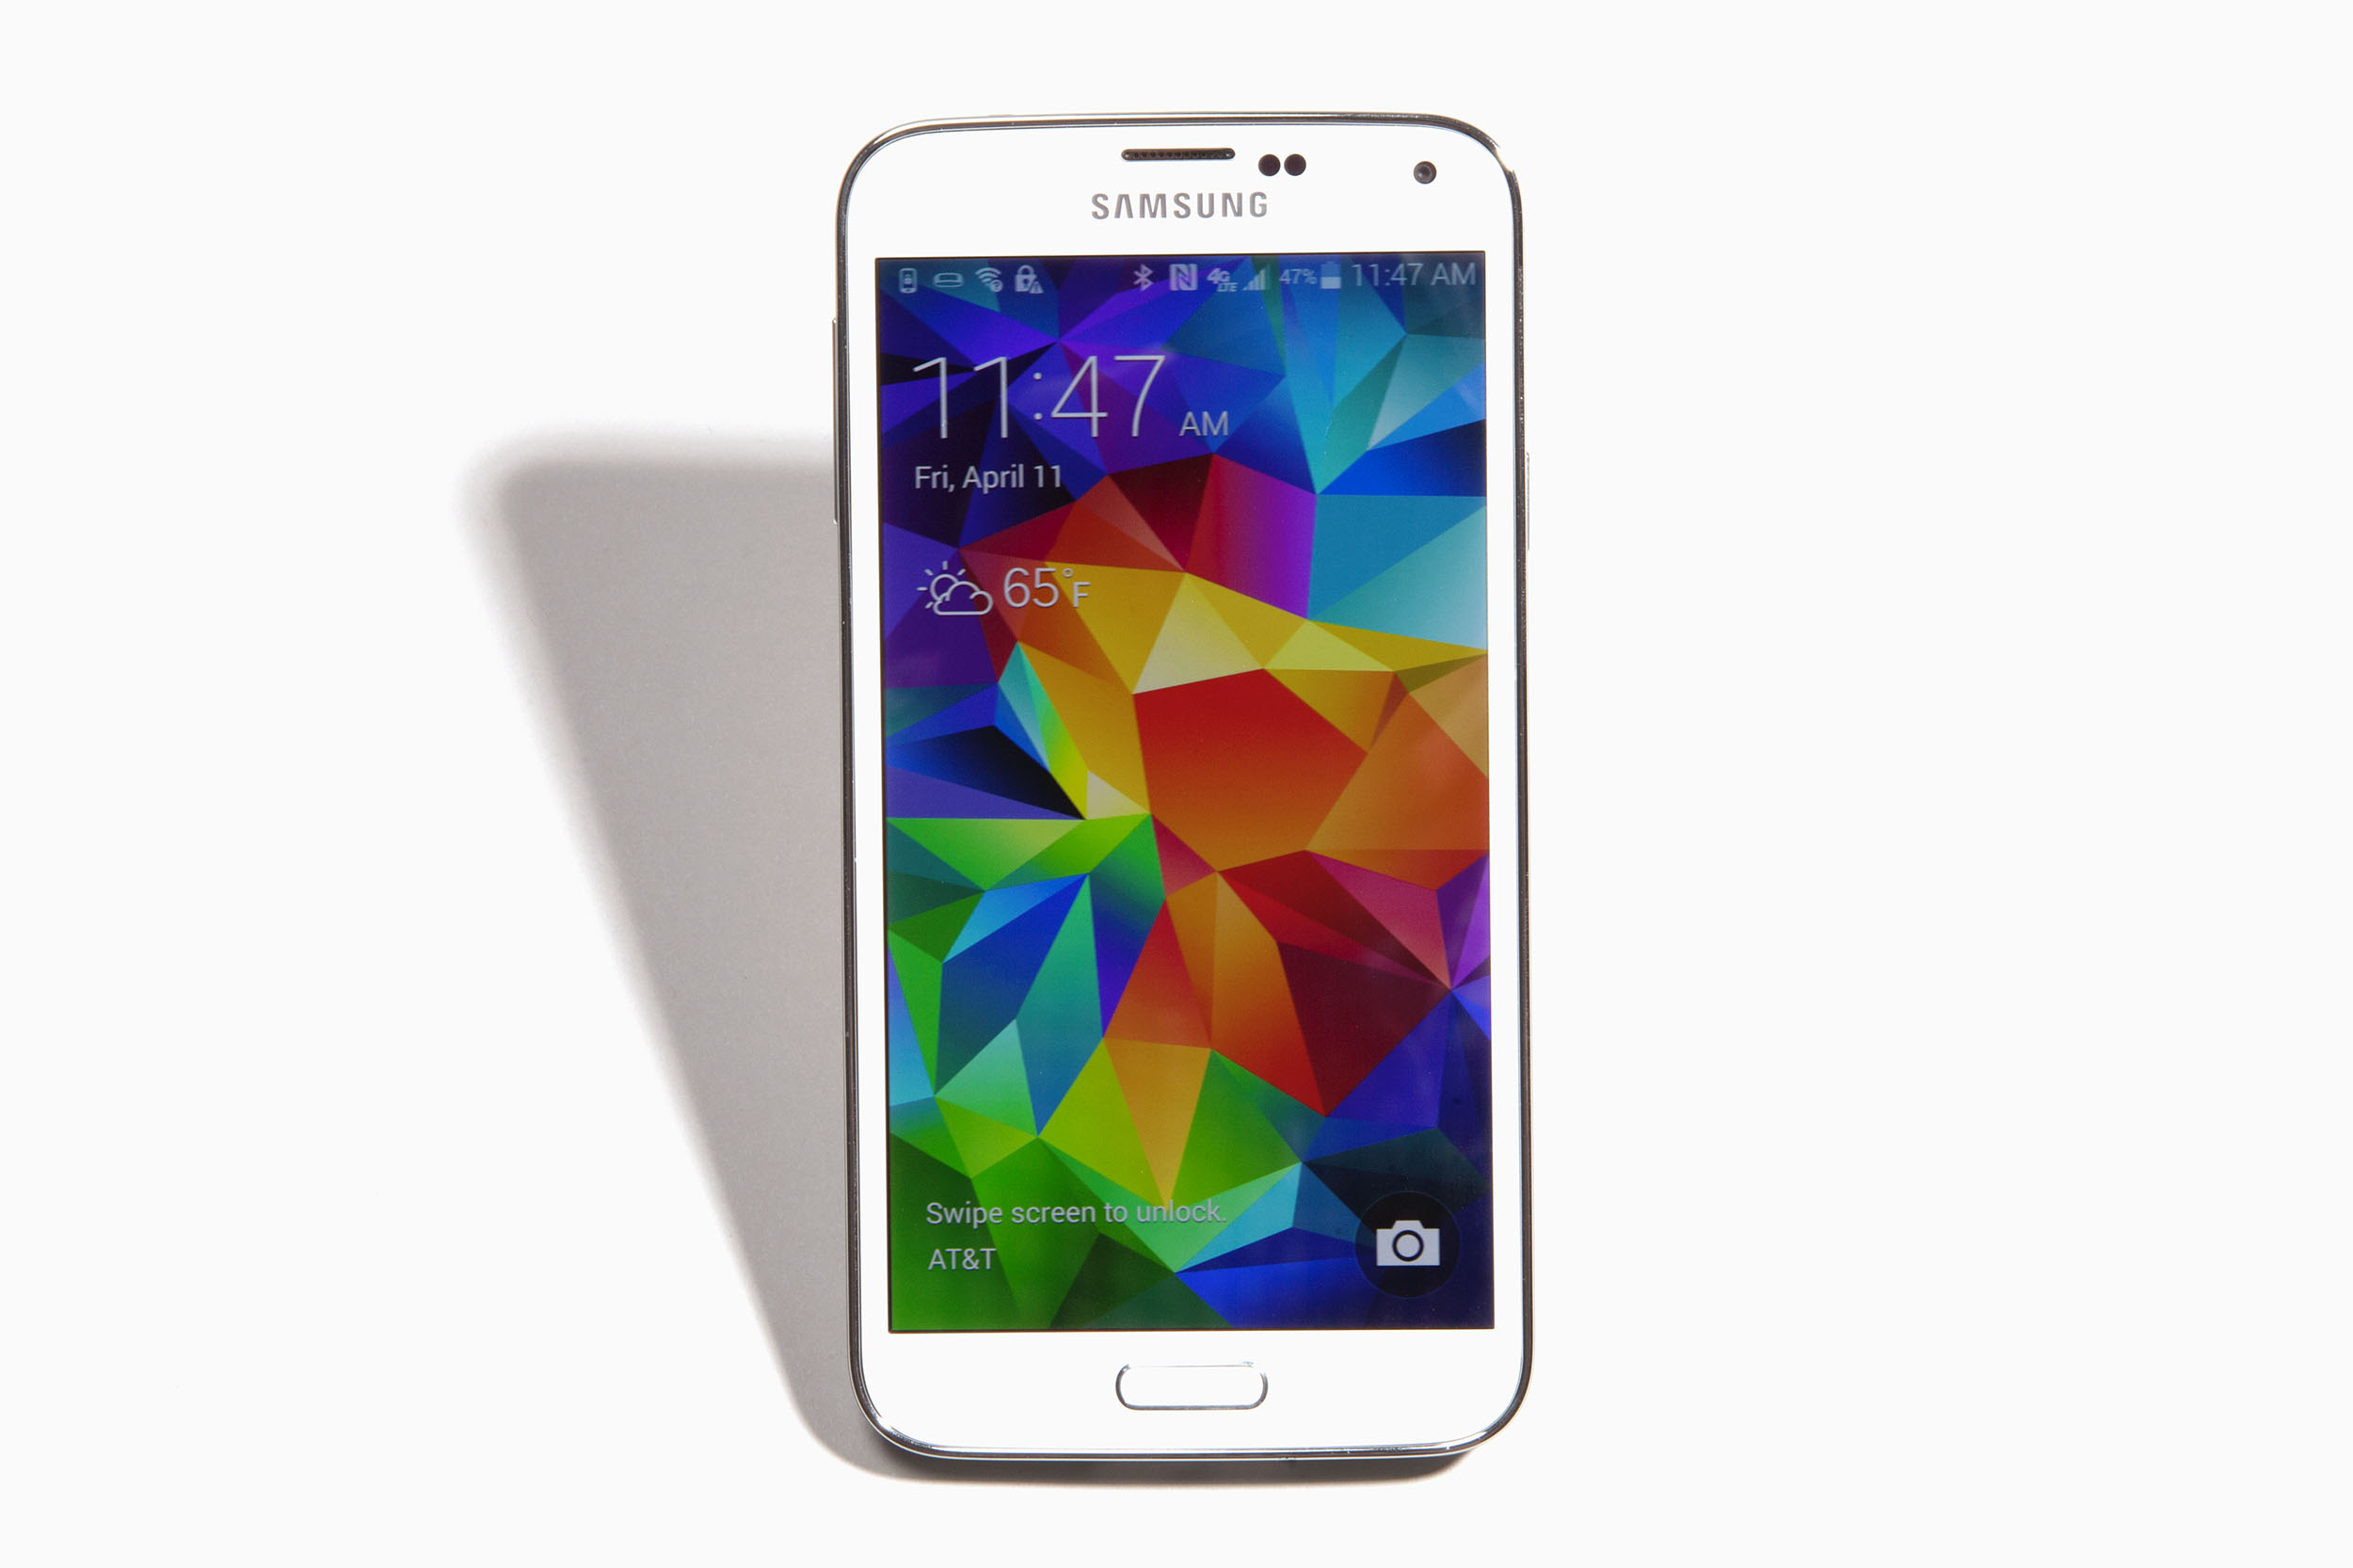 Samsung Galaxy S5 جالكسي إس 5